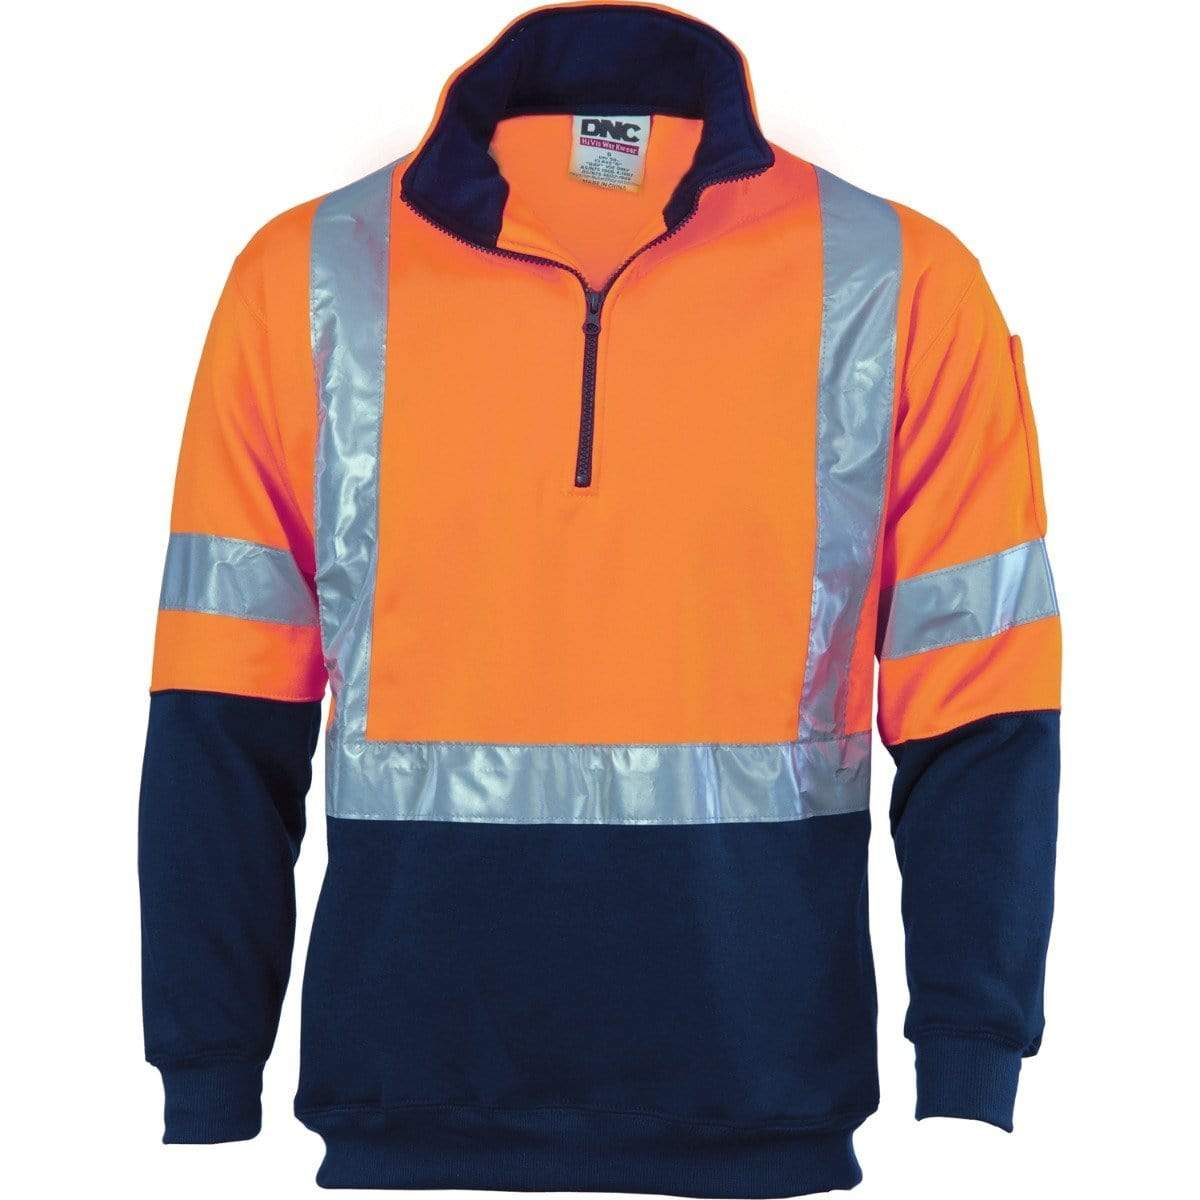 Dnc Workwear Hi-vis 1/2 Zip Fleecy With ‘x’ Back & Additional Tape On Tail - 3930 Work Wear DNC Workwear Orange/Navy S 